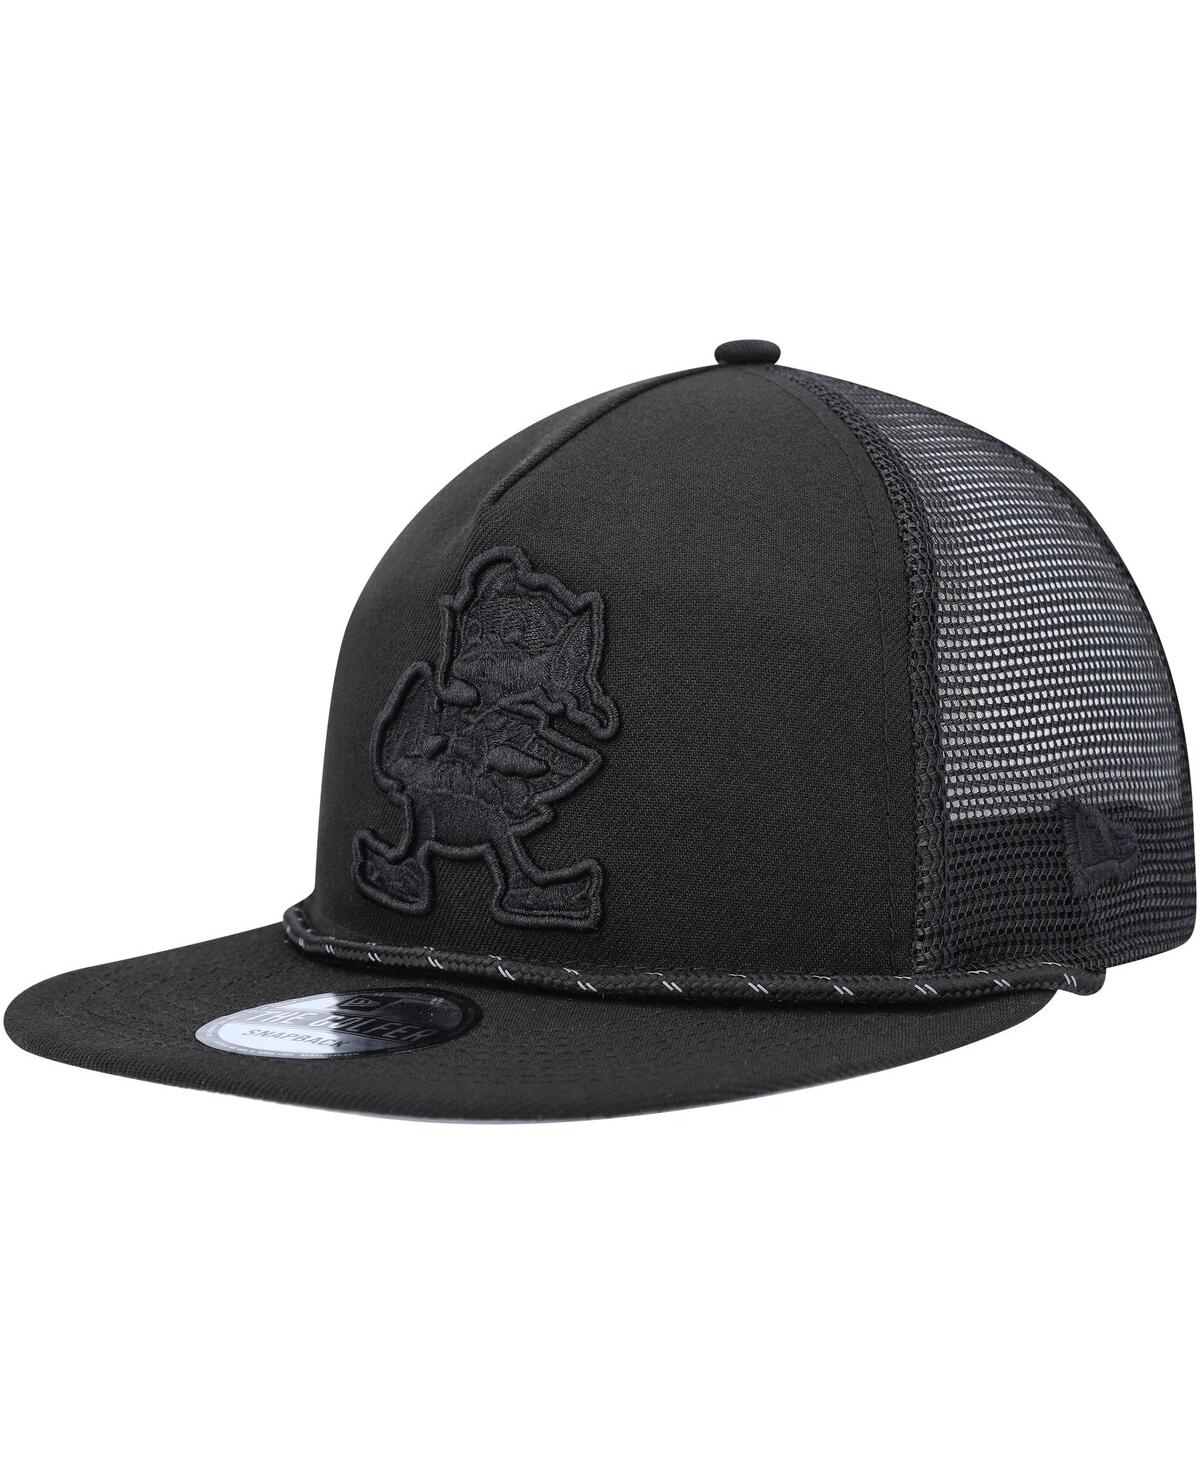 Shop New Era Men's  Black Cleveland Browns Illumination Golfer Snapback Trucker Hat